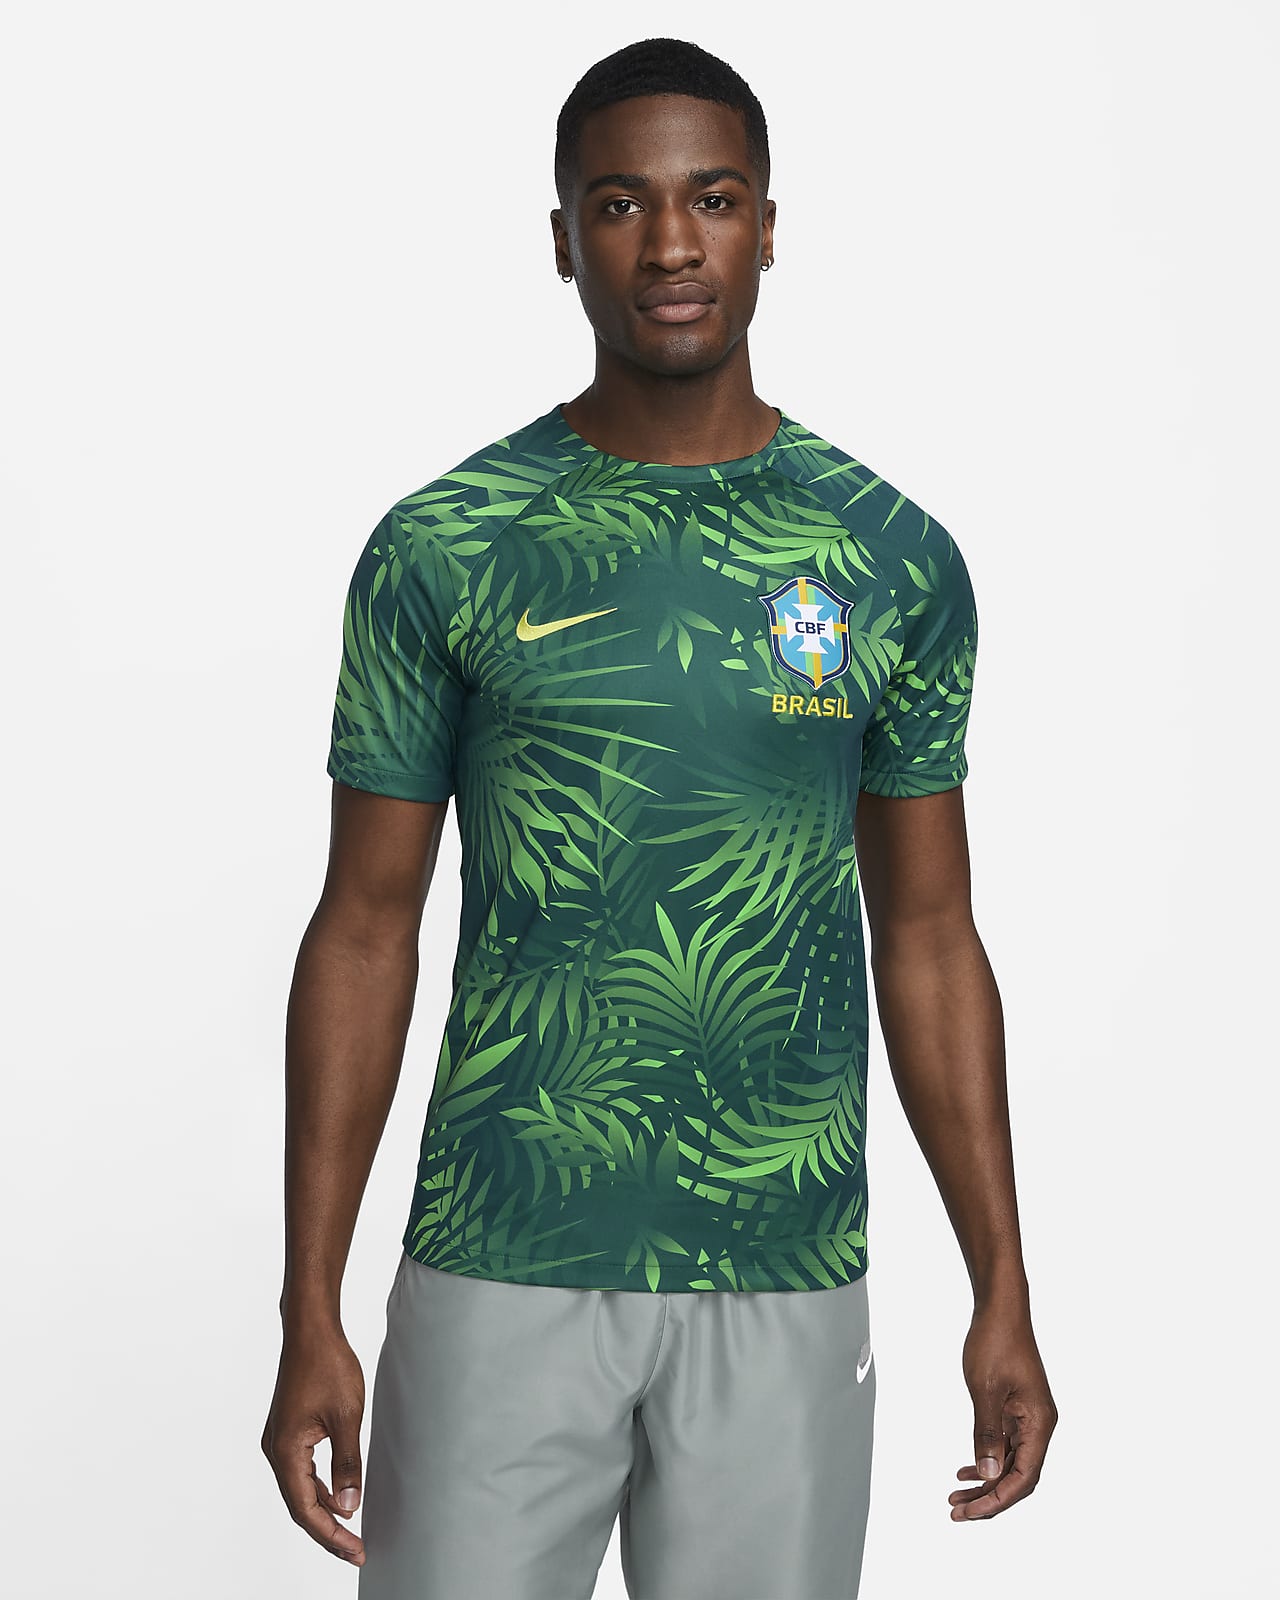 Brazil Academy Pro Men's Nike Dri-FIT Pre-Match Soccer Top